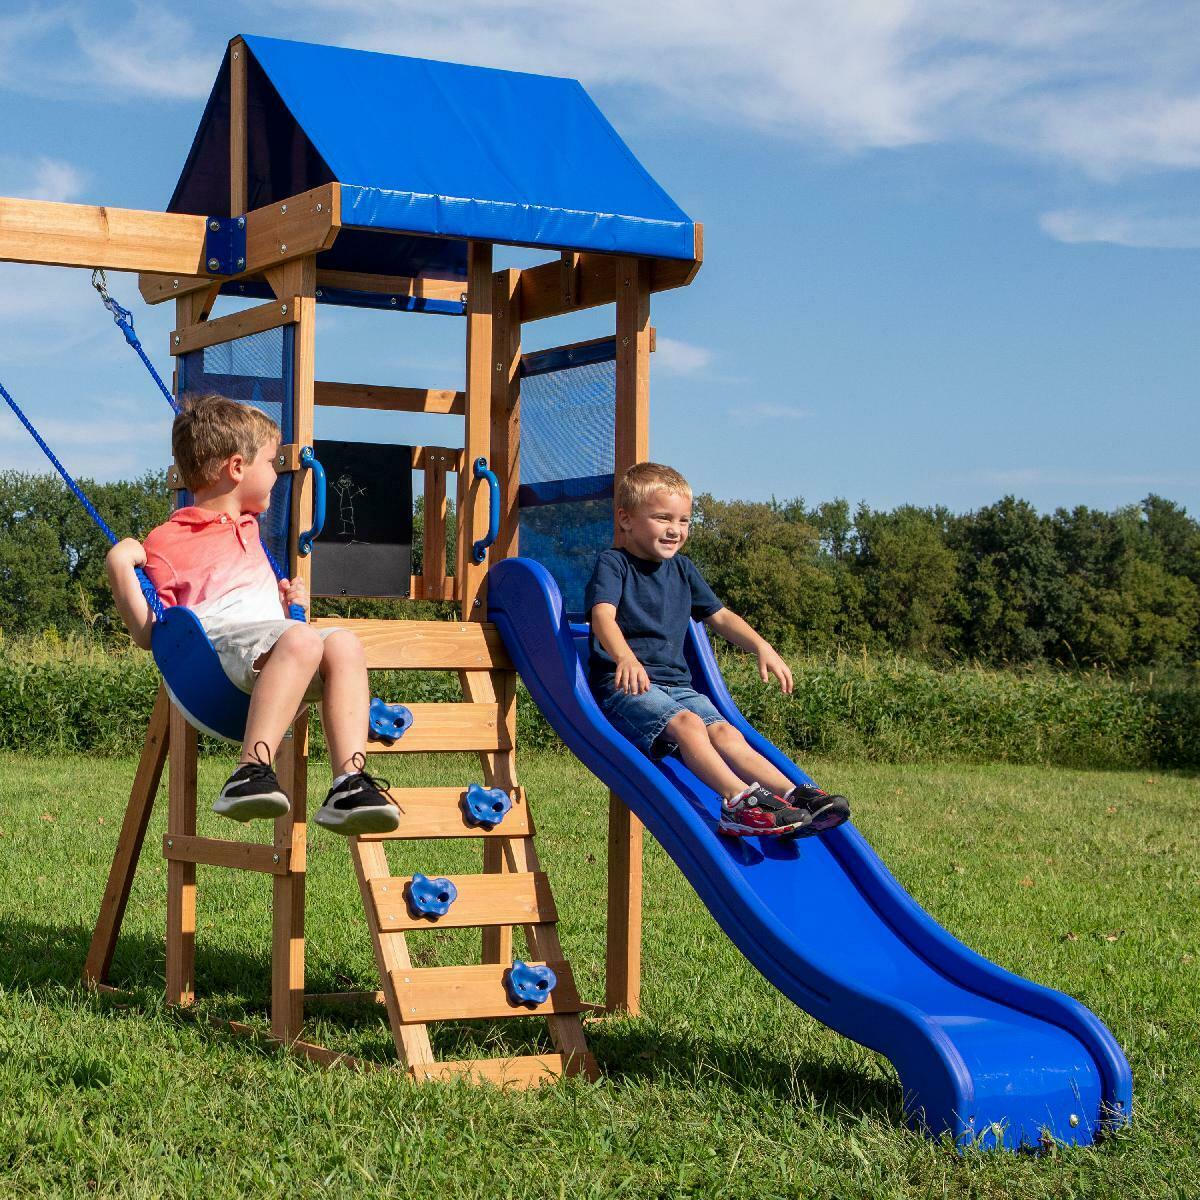 Outdoor Wooden Swing Set - Backyard Clubhouse Slide Swings Playground - Backyard Playset Kids